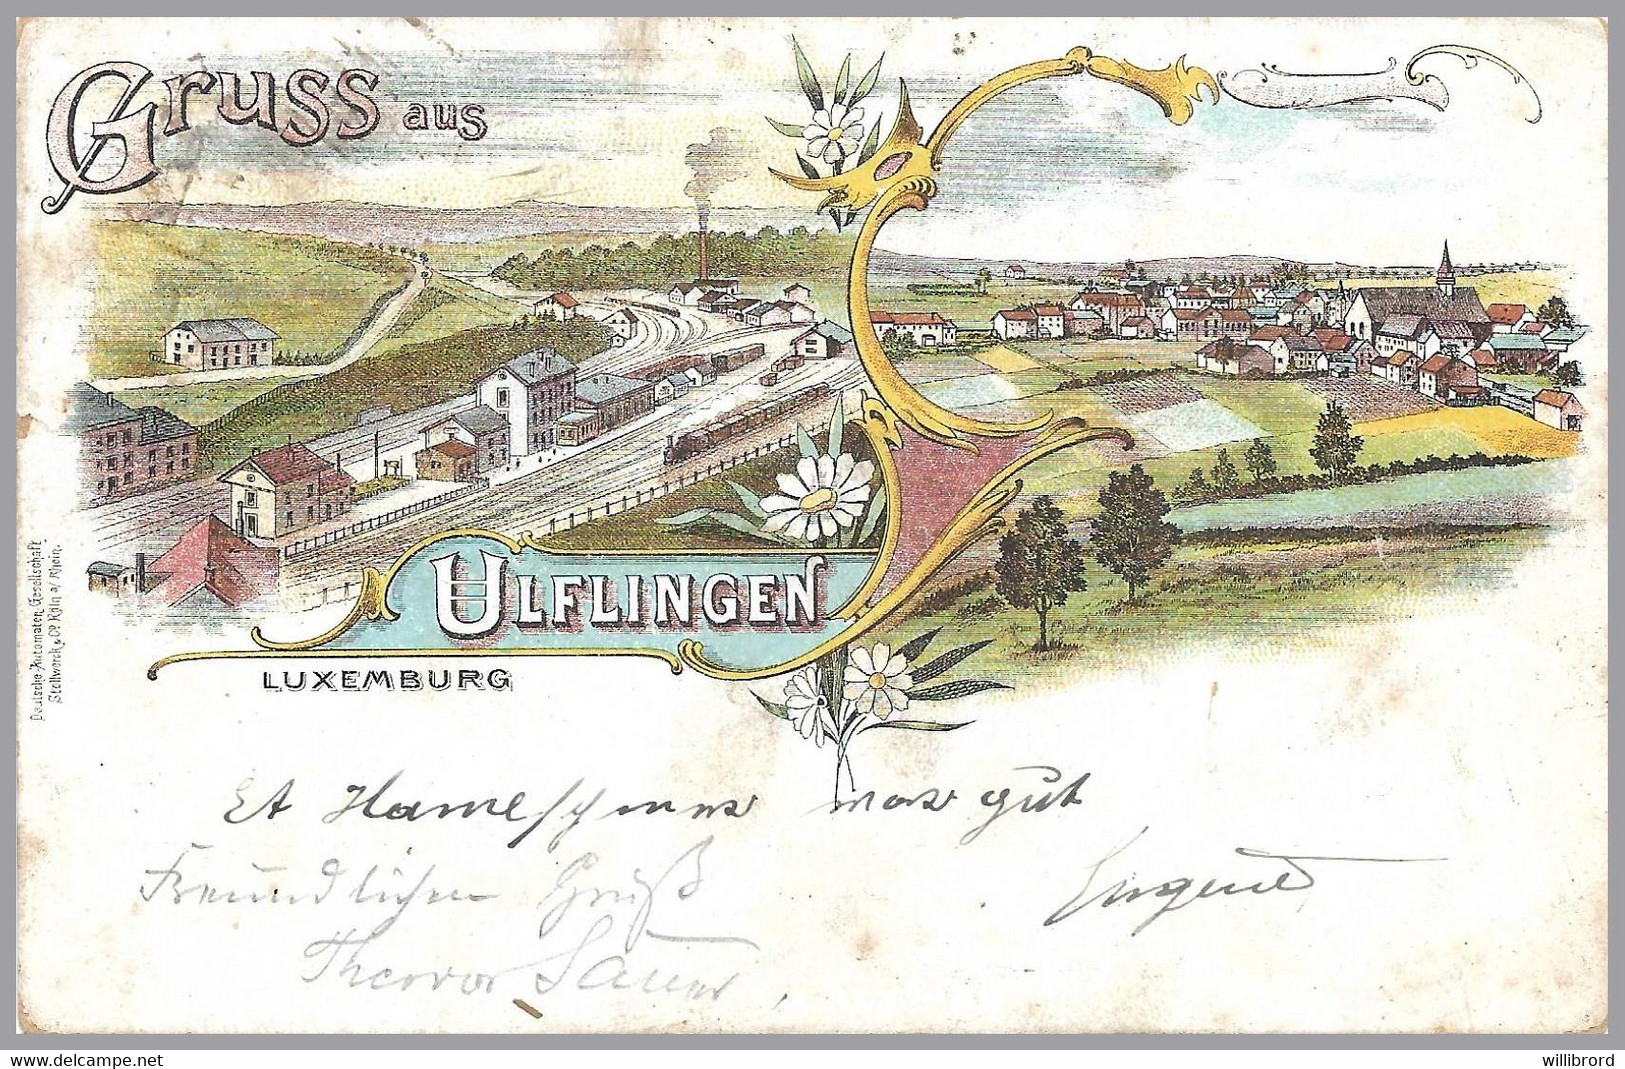 LUXEMBOURG - 1899 GRUSS AUS ULFLINGEN - RPO Ulflingen-Luxemburg Cancel - Used To MERSCH - Undivided Back - 1895 Adolphe De Profil